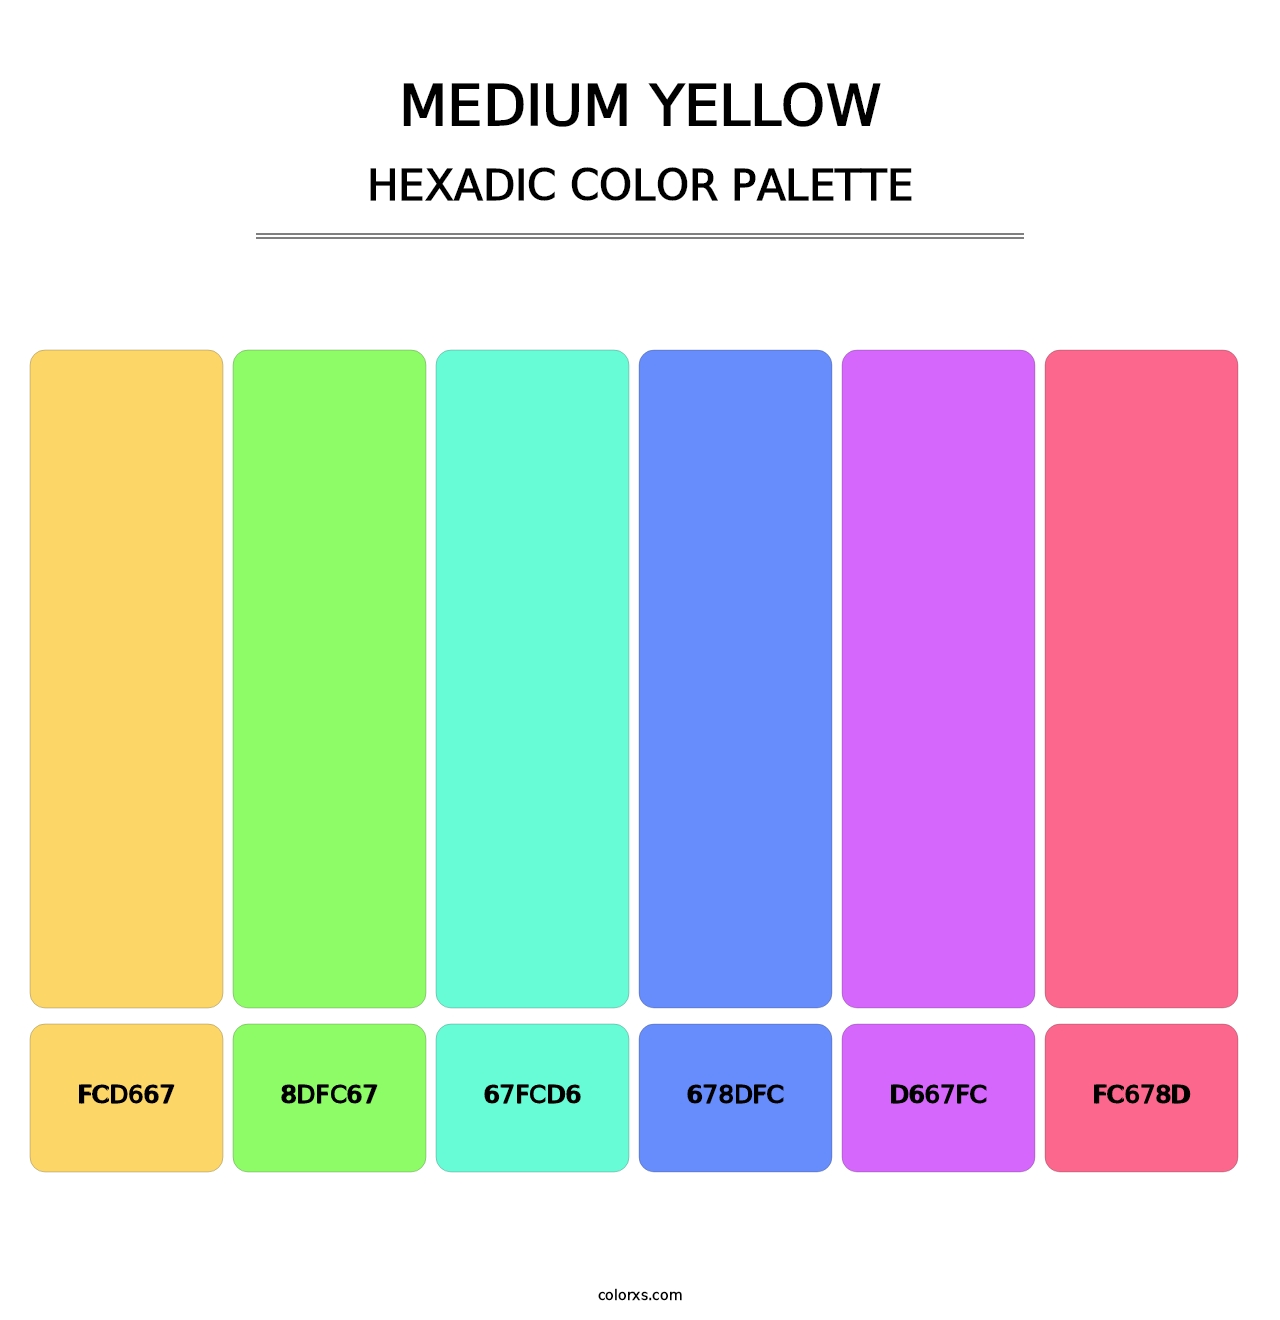 Medium Yellow - Hexadic Color Palette